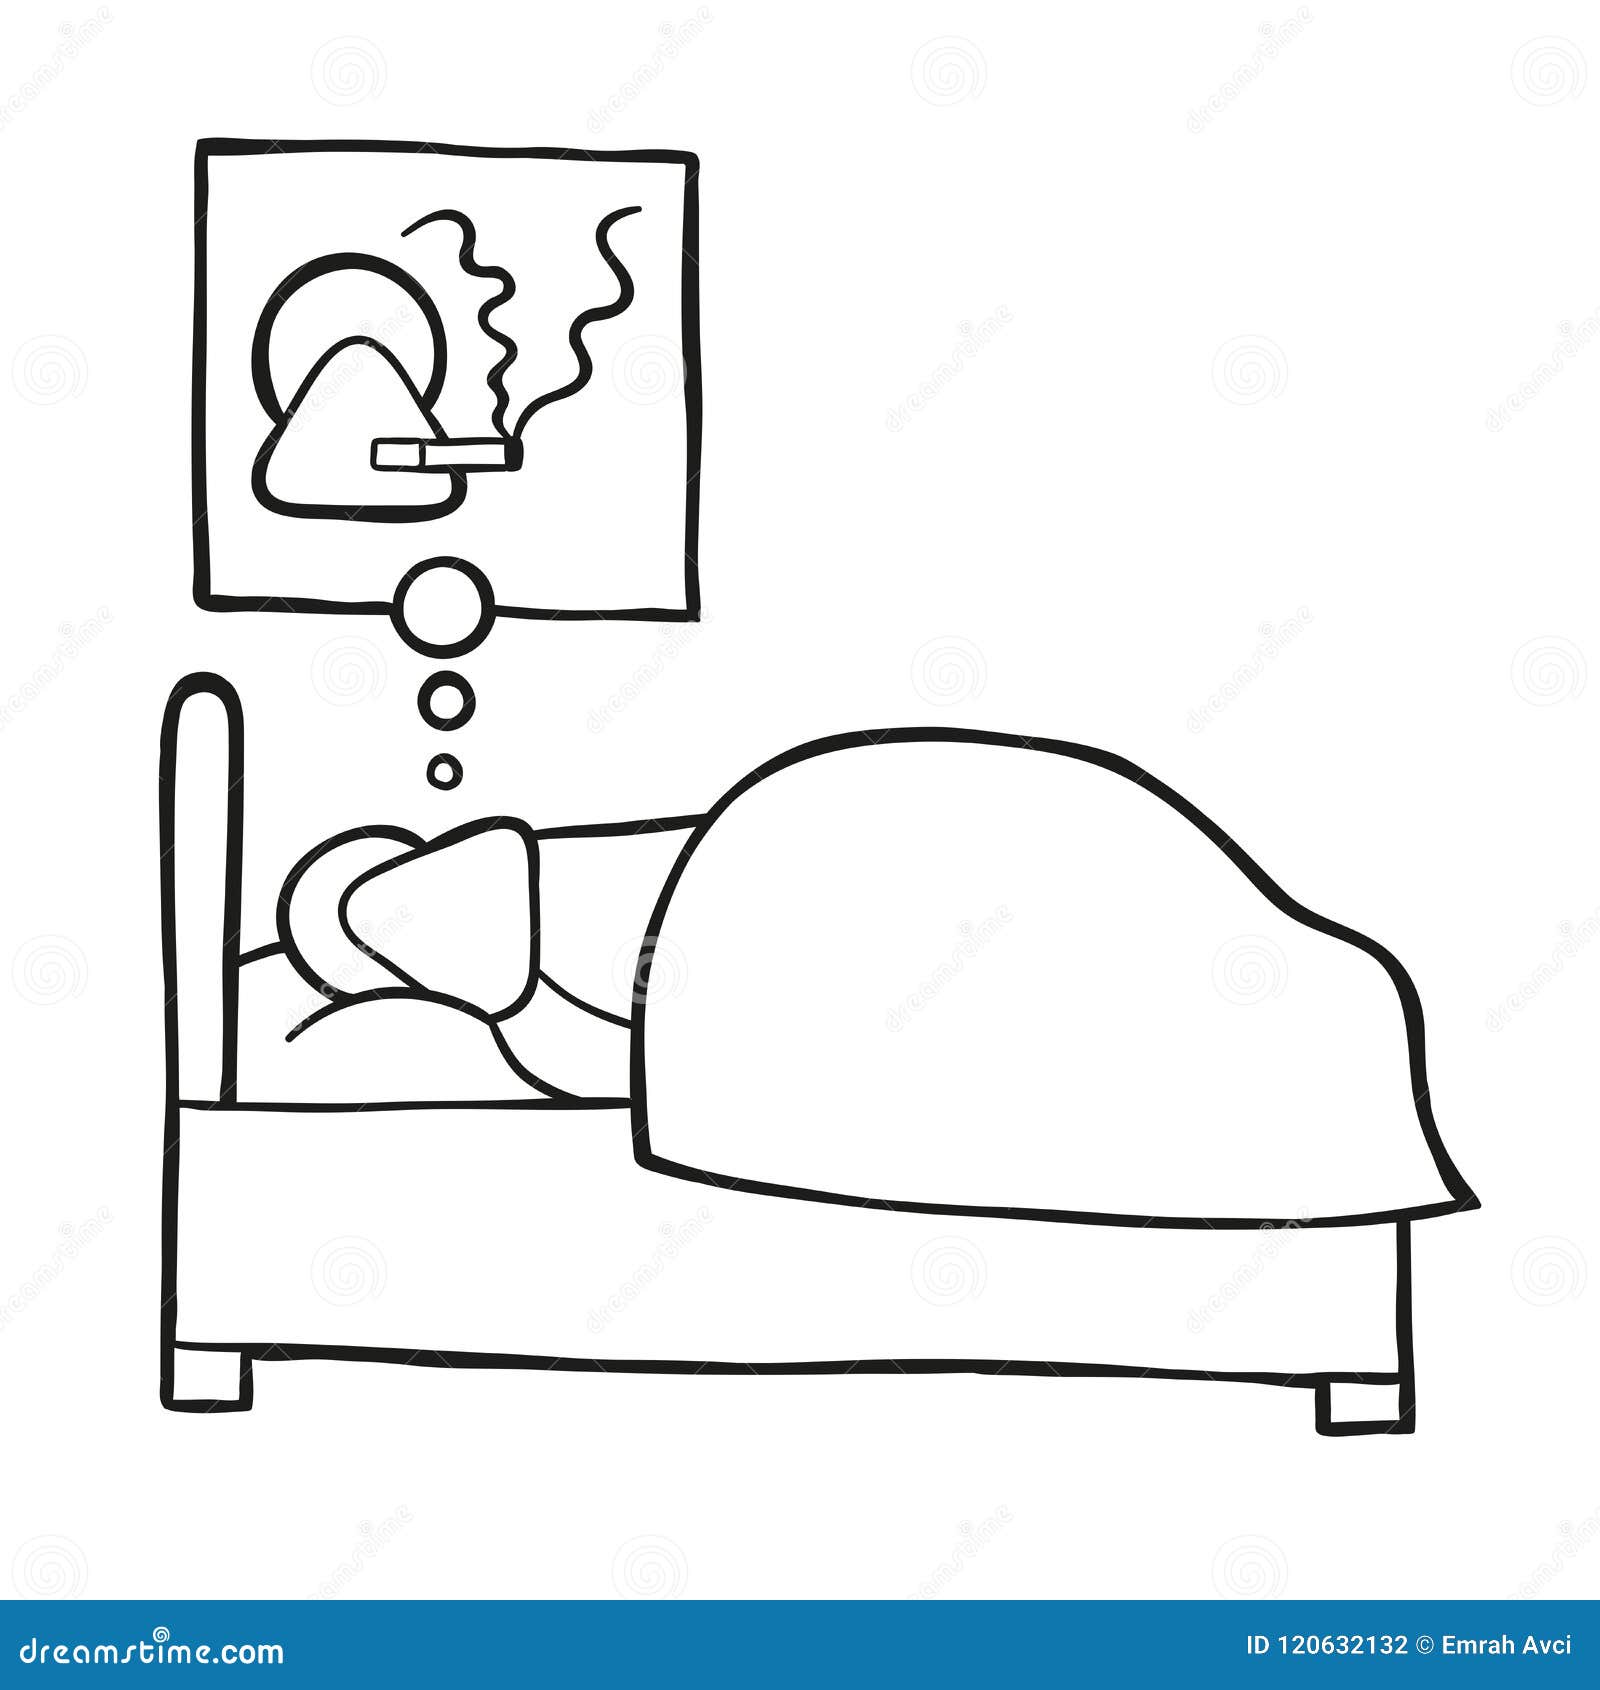 Vector cartoon man sleeping and smoking cigarette in his dream. Vector illustration cartoon man character sleeping and smoking cigarette in his dream.